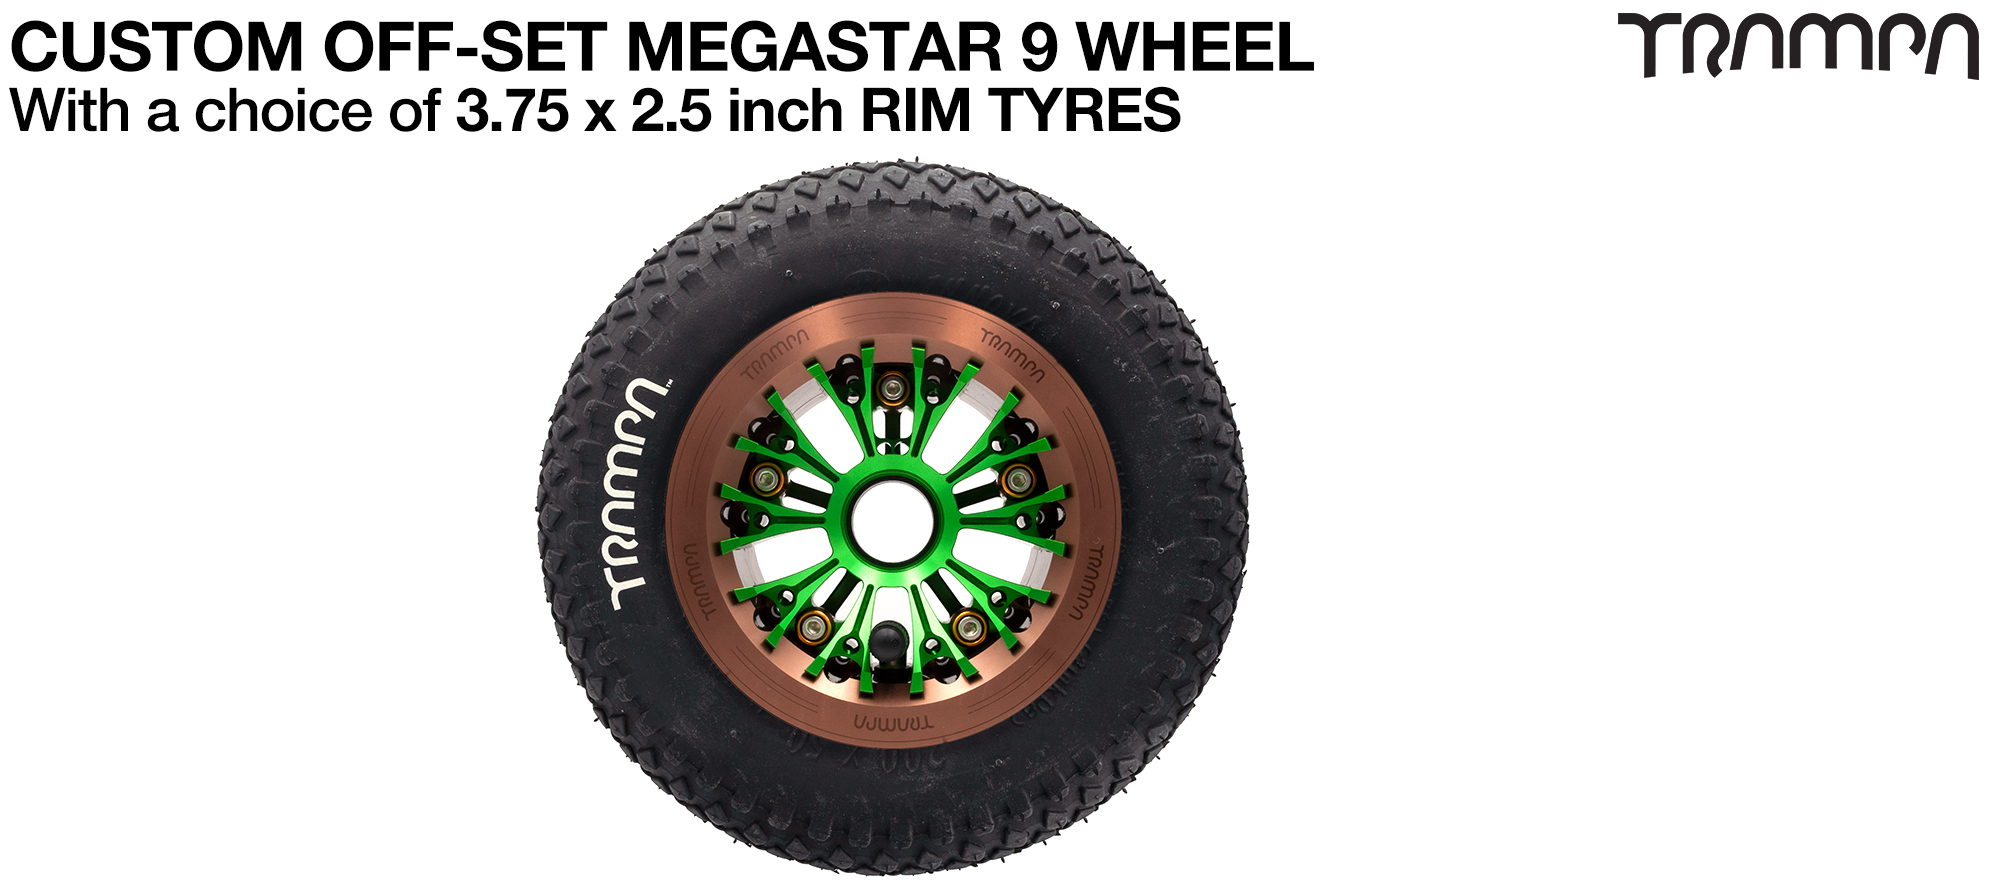 OFF-SET MEGASTAR 9 WHEEL - 8 Inch Tyres  (£85)